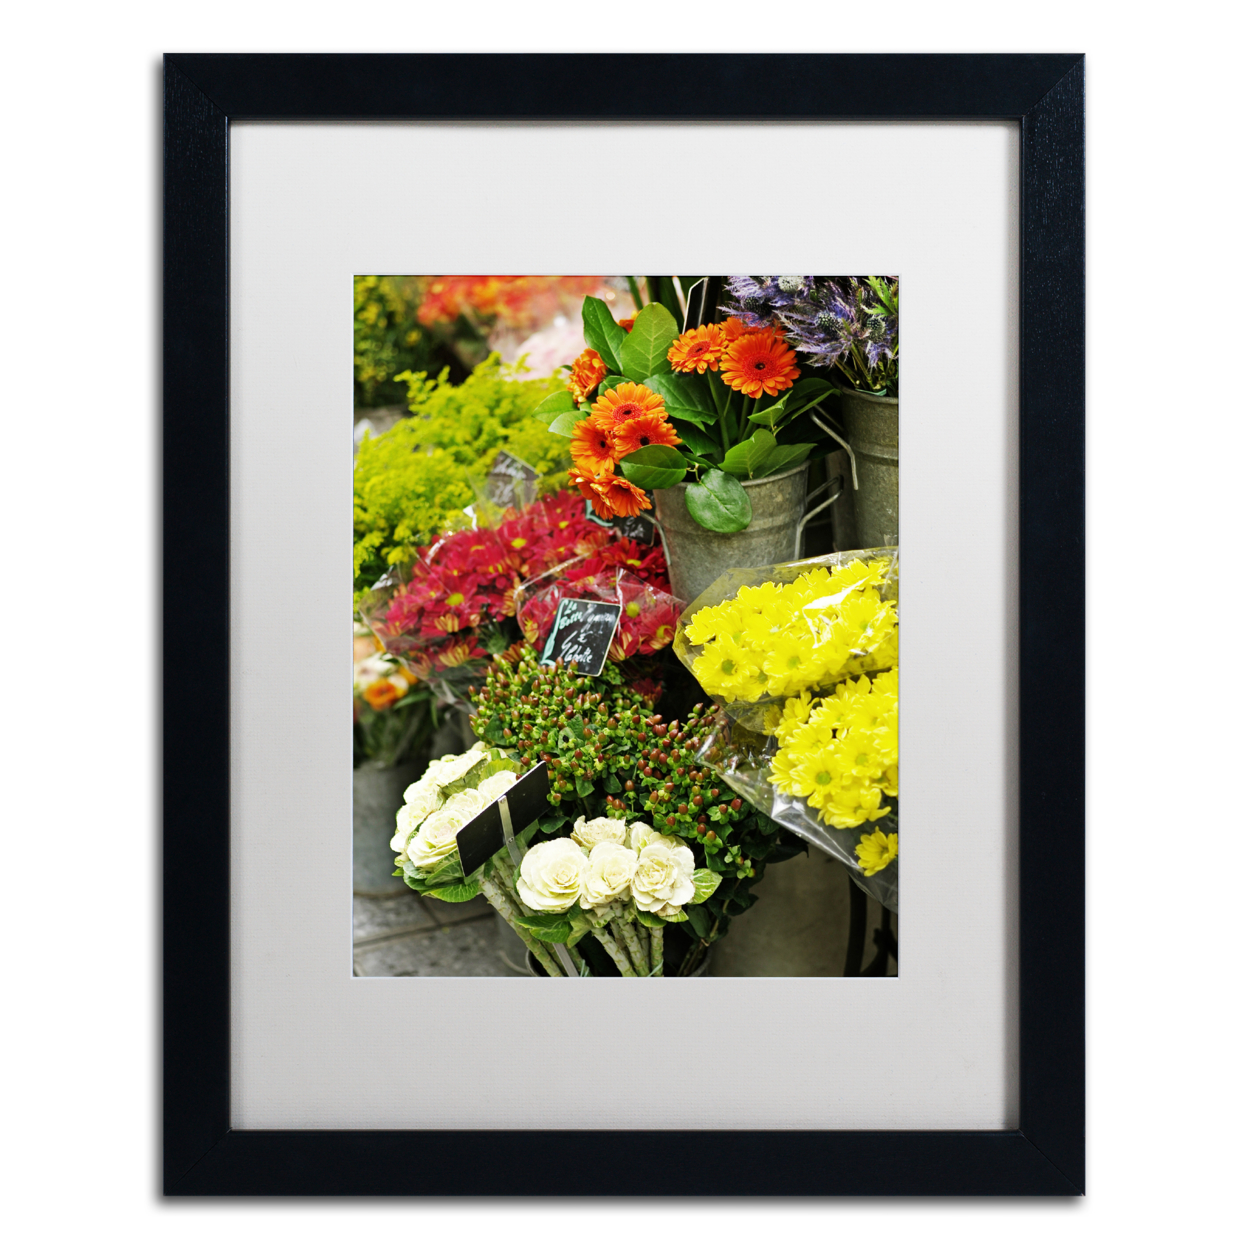 Preston 'Parisian Flowers' Black Wooden Framed Art 18 X 22 Inches